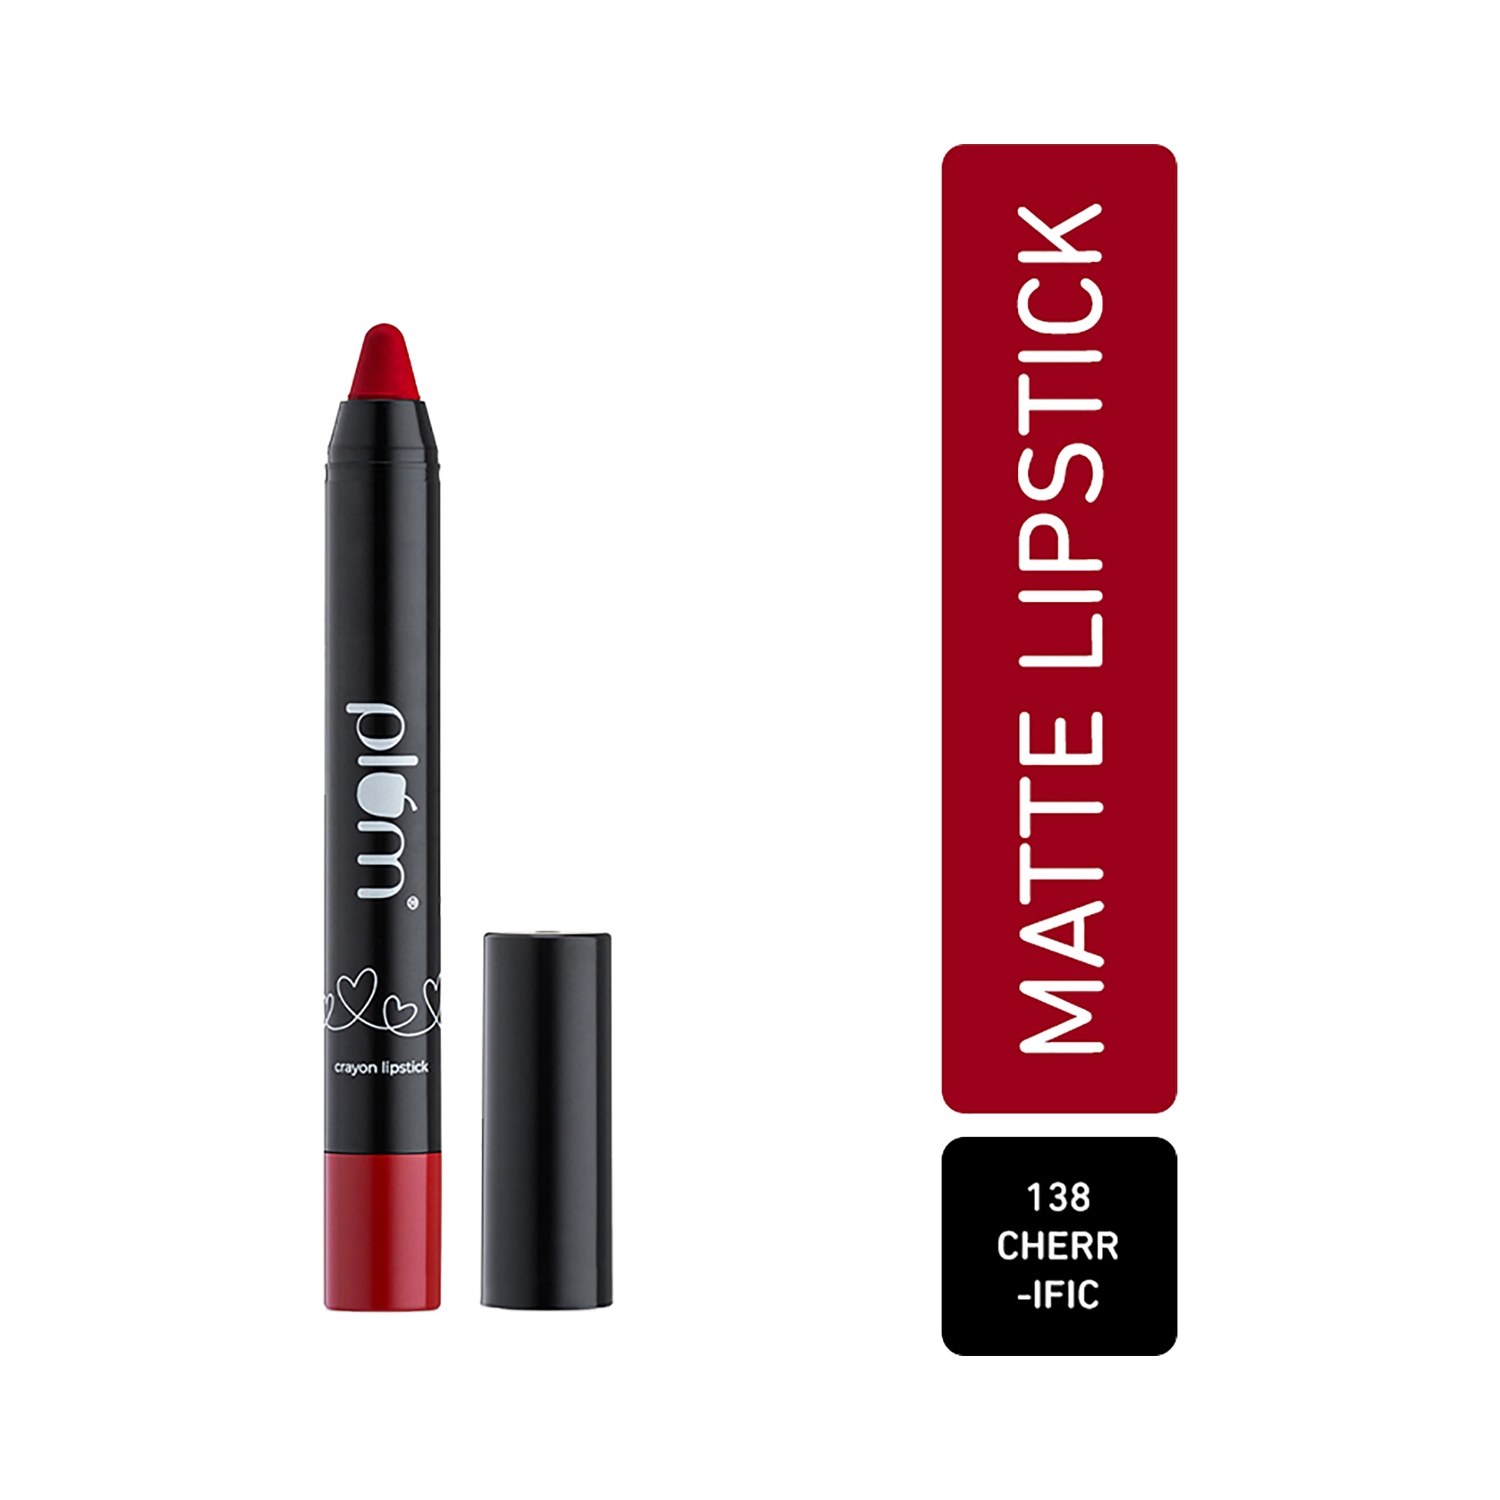 Plum Twist & Go Matte Crayon Lipstick with Ceramides & Hyaluronic Acid - 138 Cherrific (1.8g)